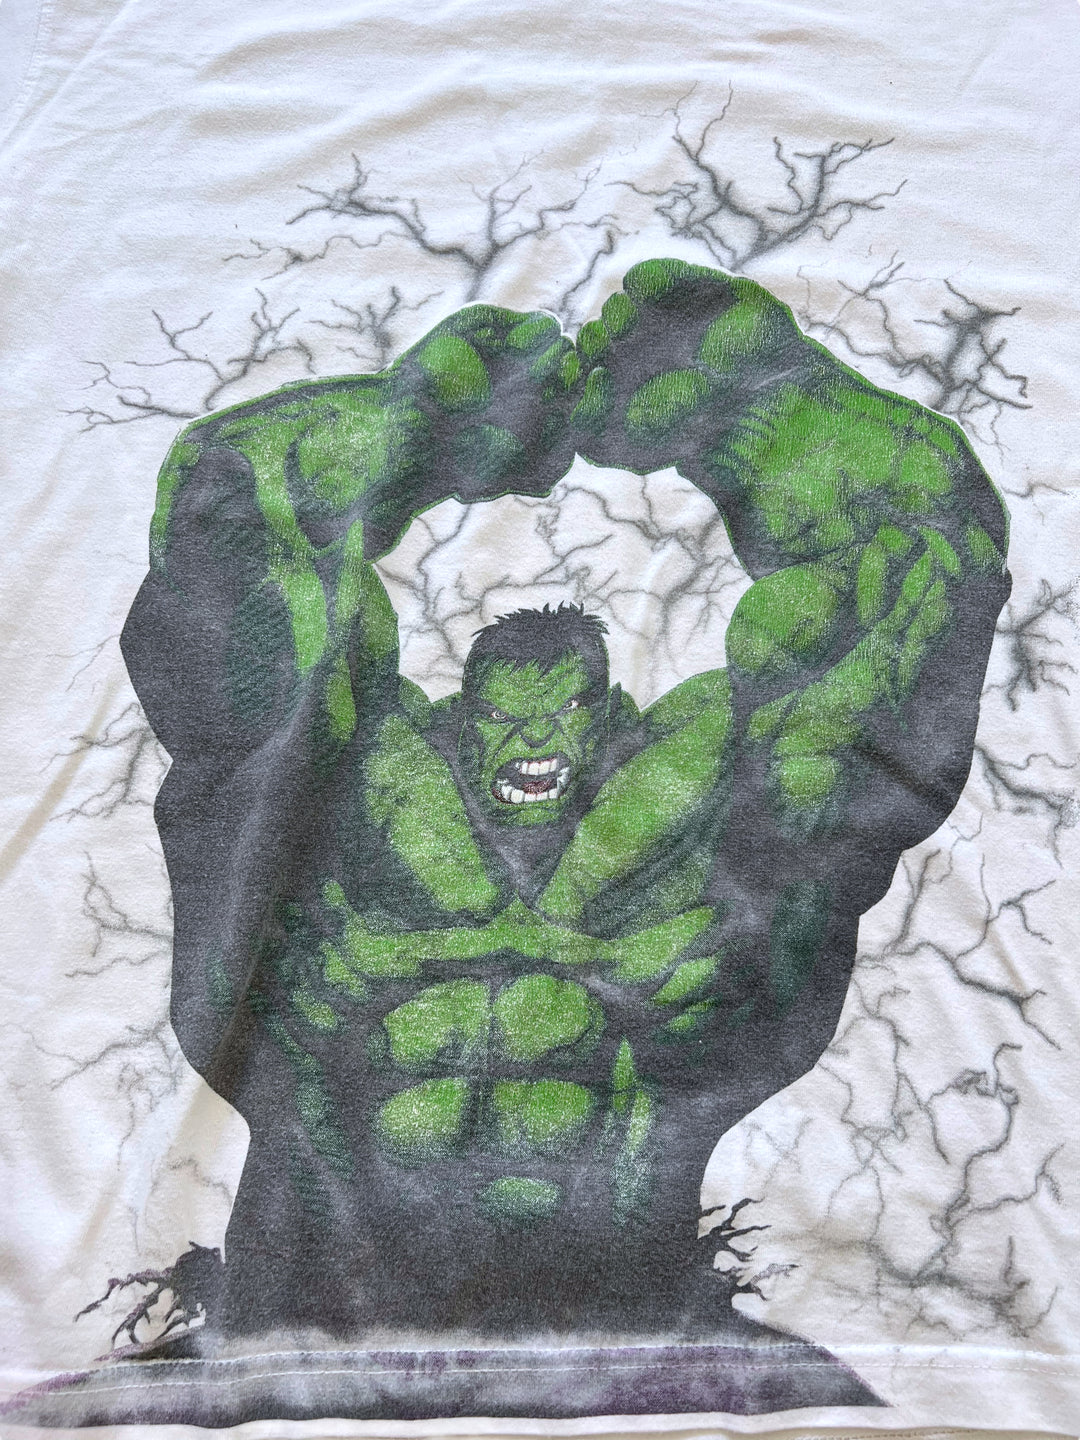 Vintage New Era Marvel Hulk T-Shirt Men’s Large